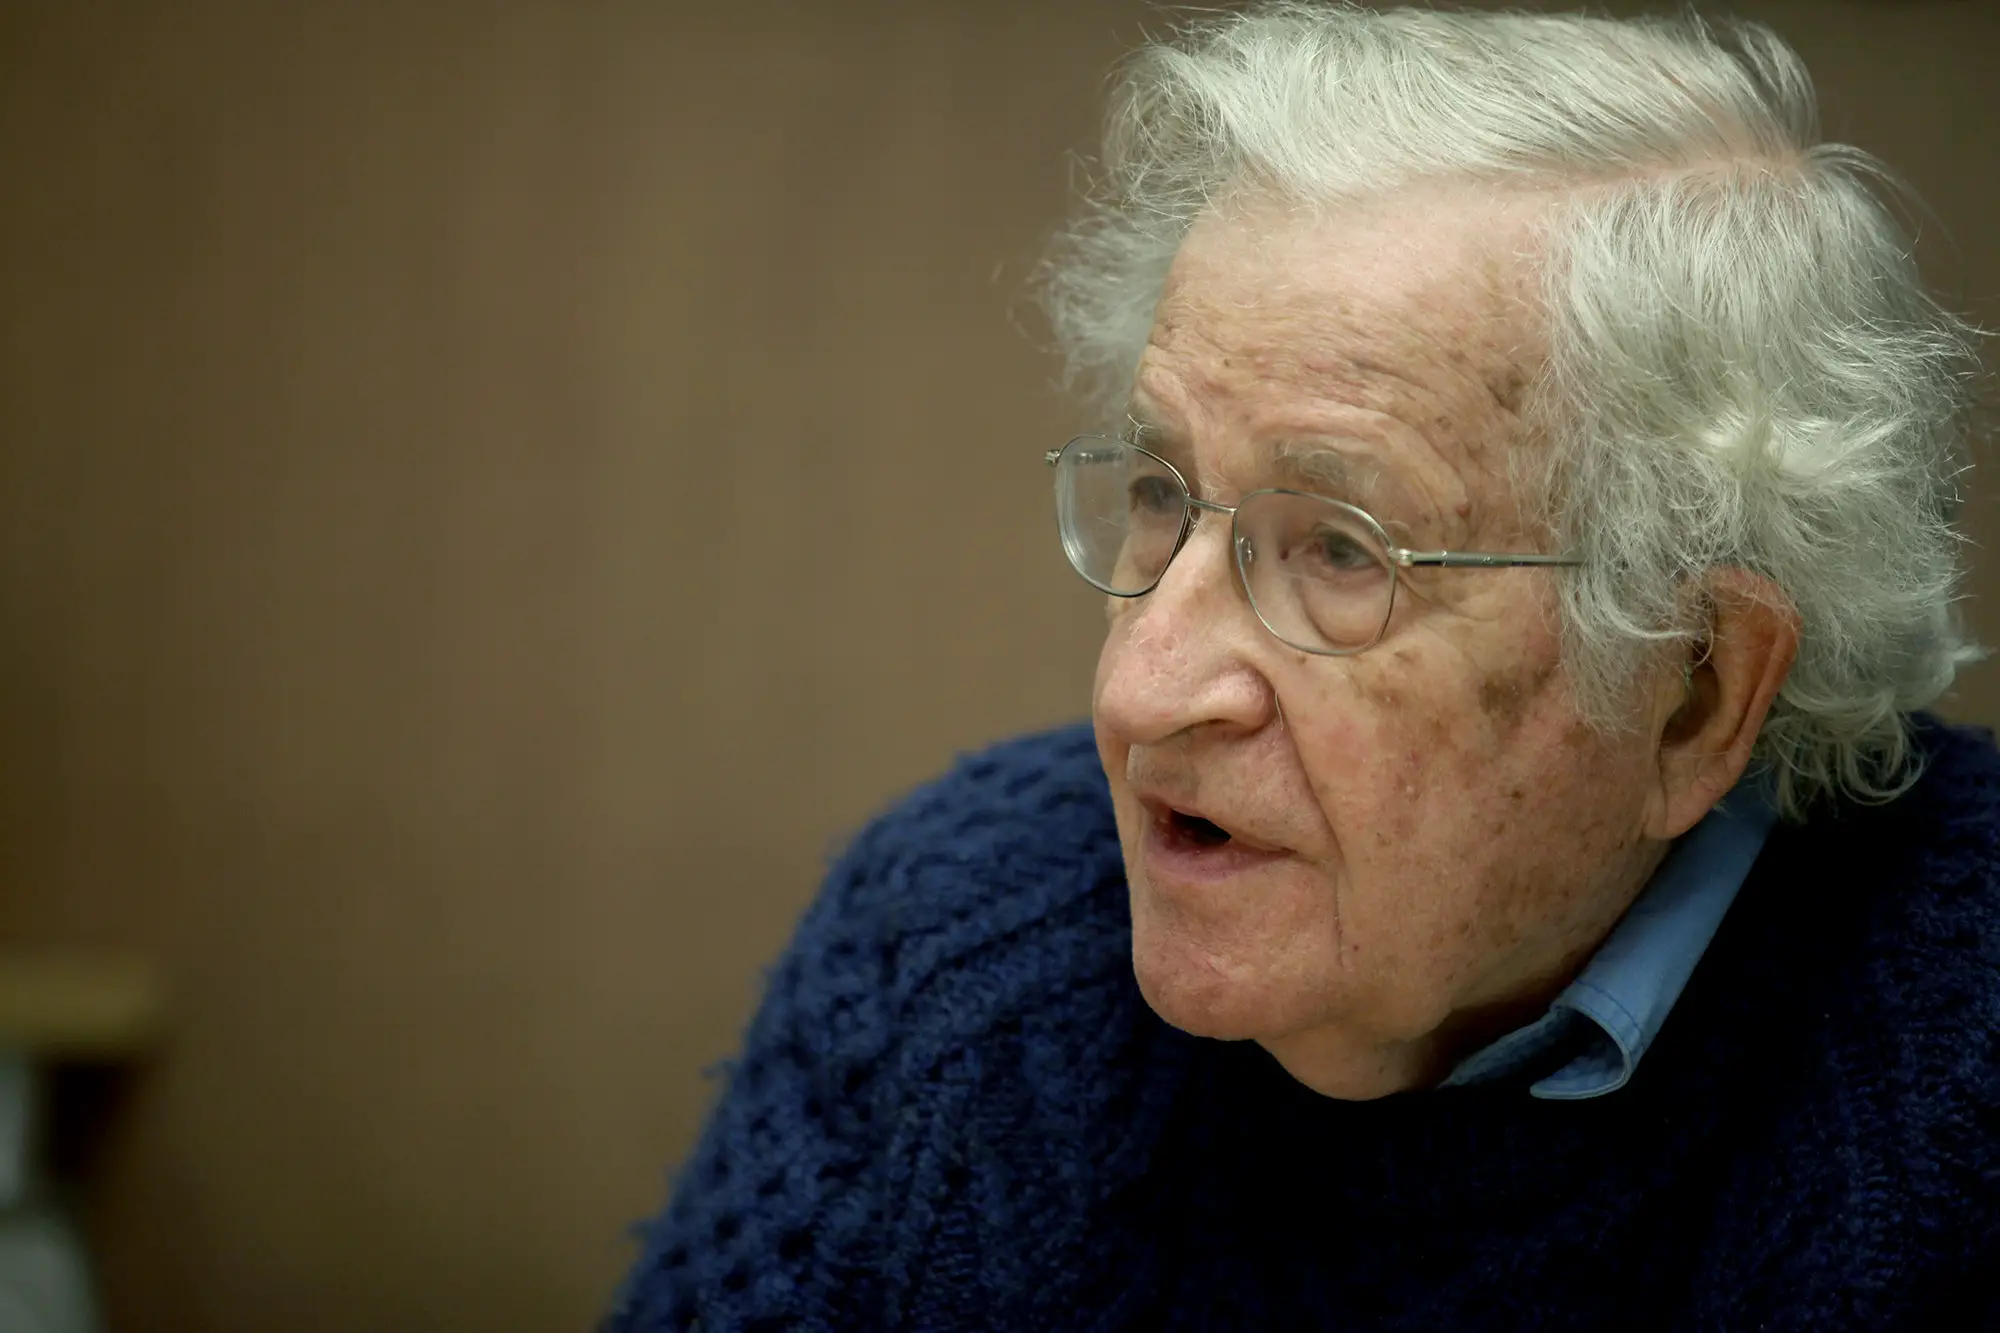 25 Noam Chomsky Quotes On Hope, Politics & More